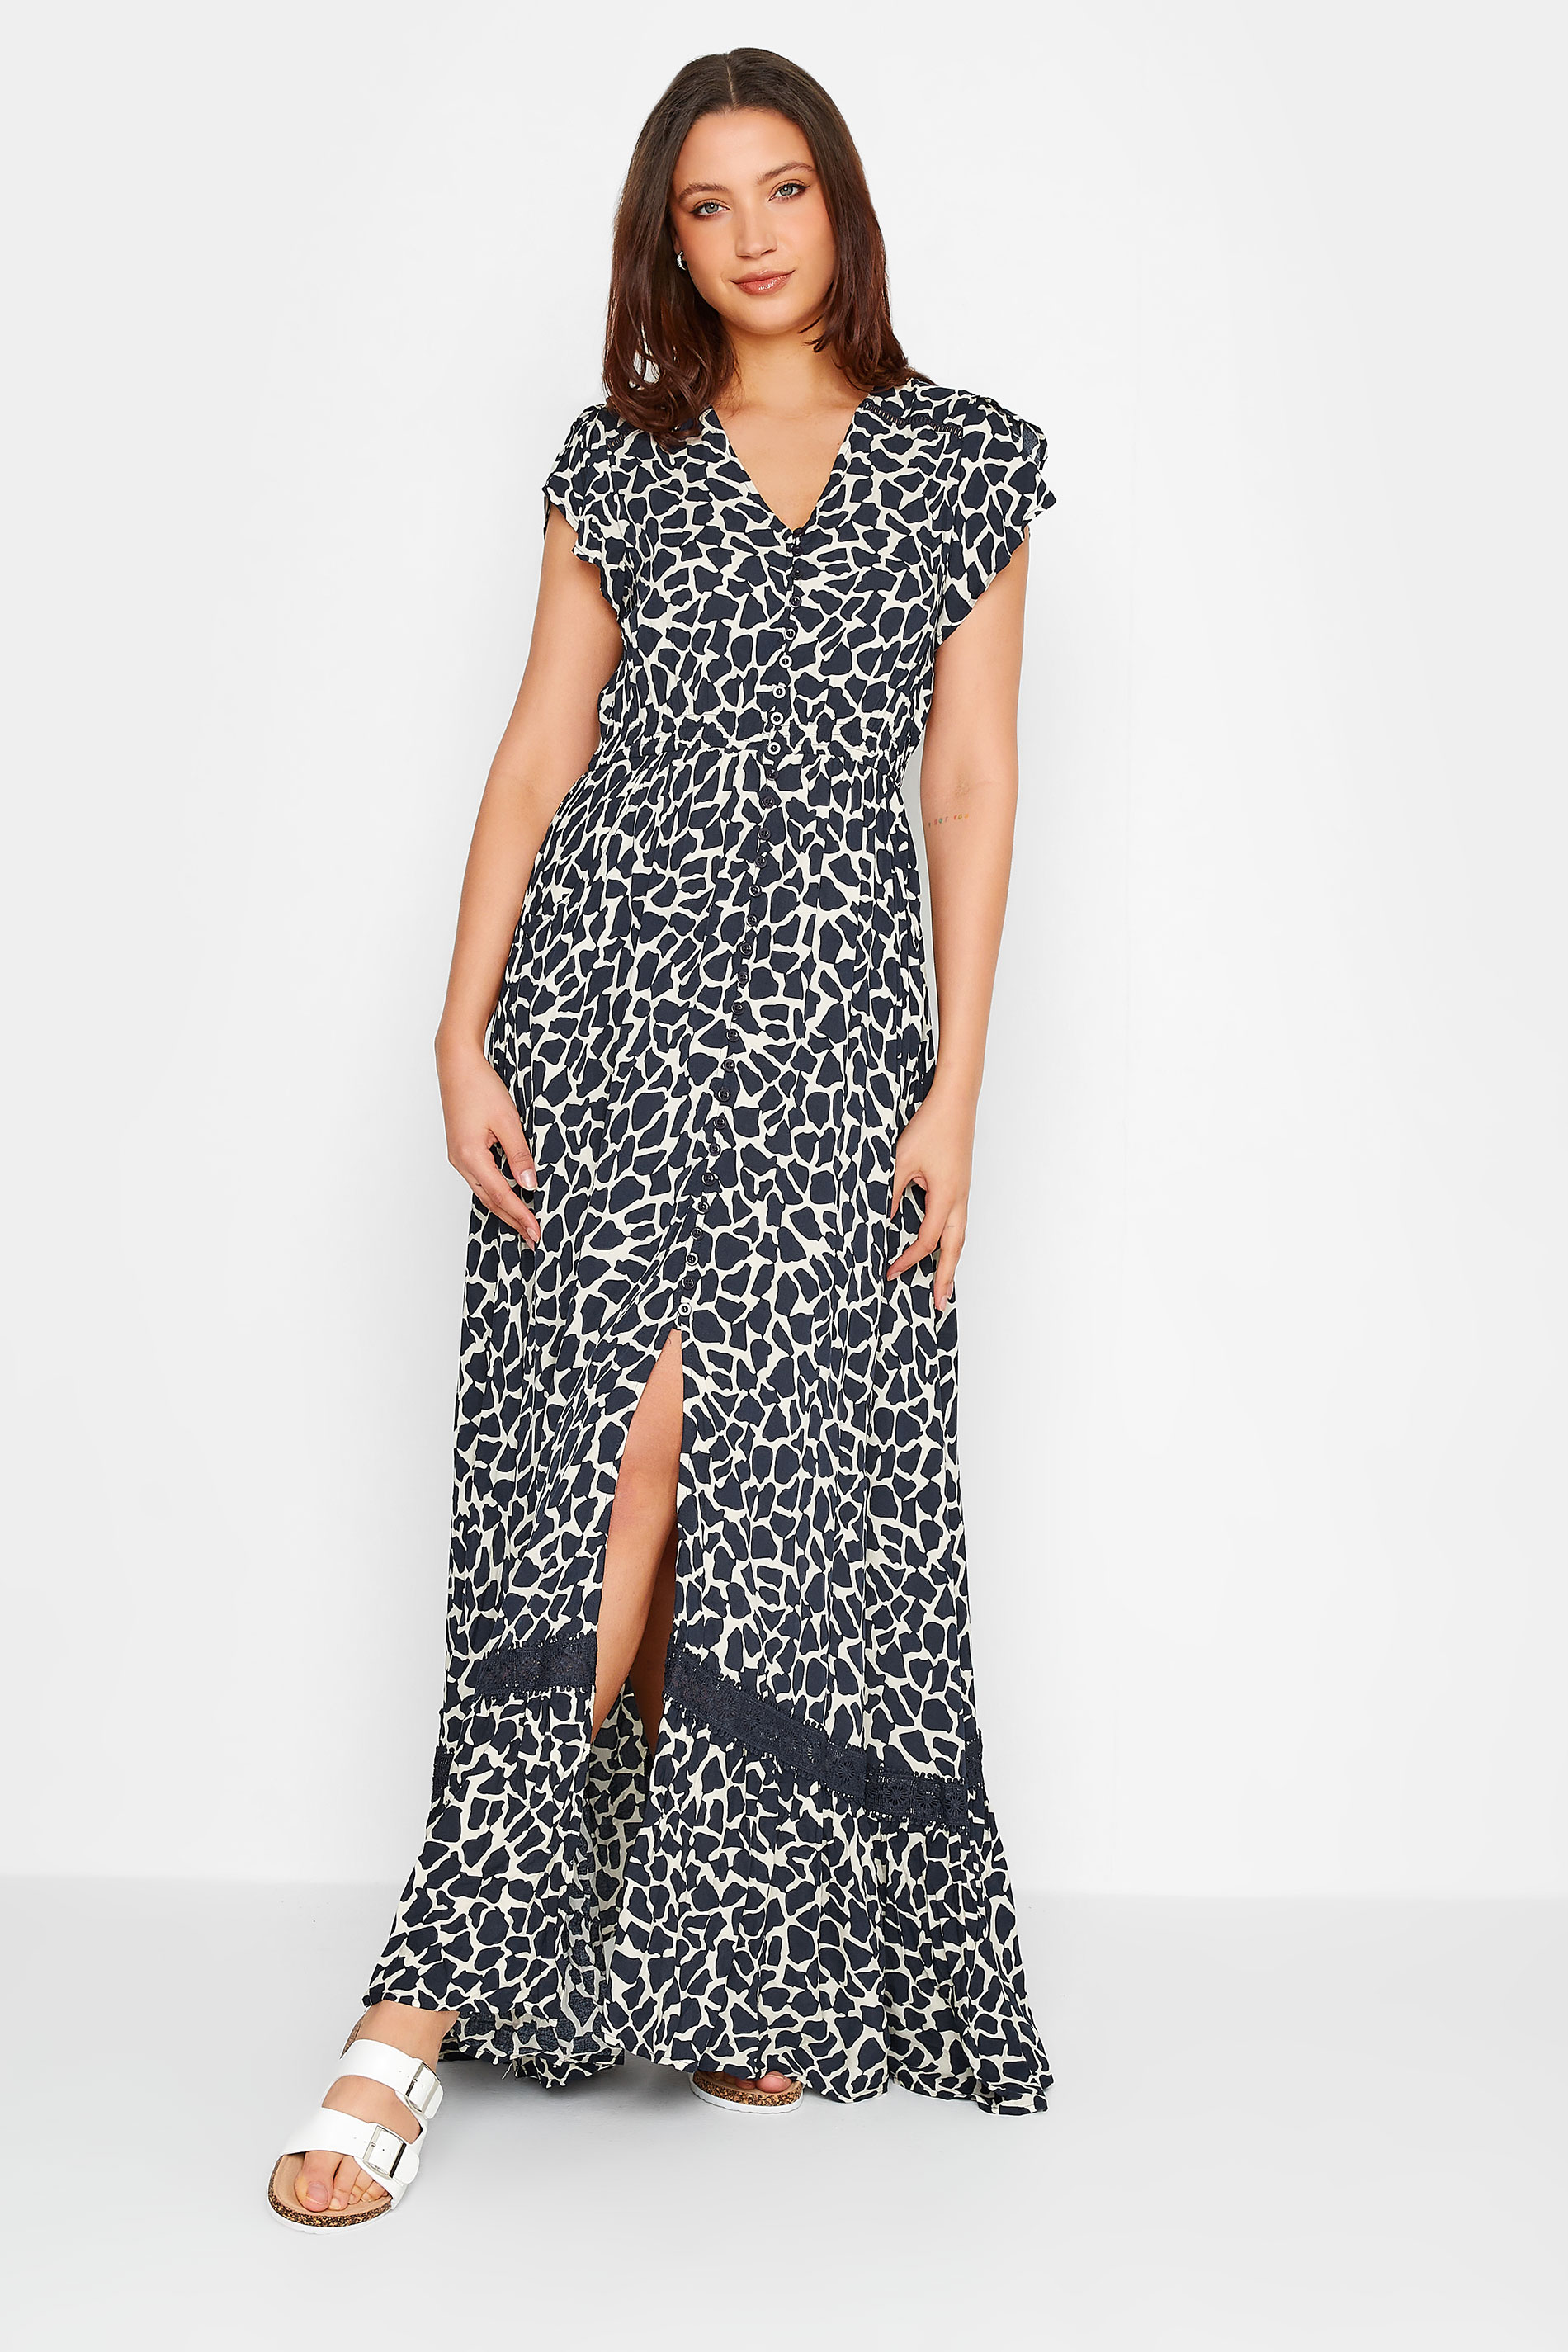 LTS Tall Women's Navy Blue Animal Print Maxi Dress | Long Tall Sally  1